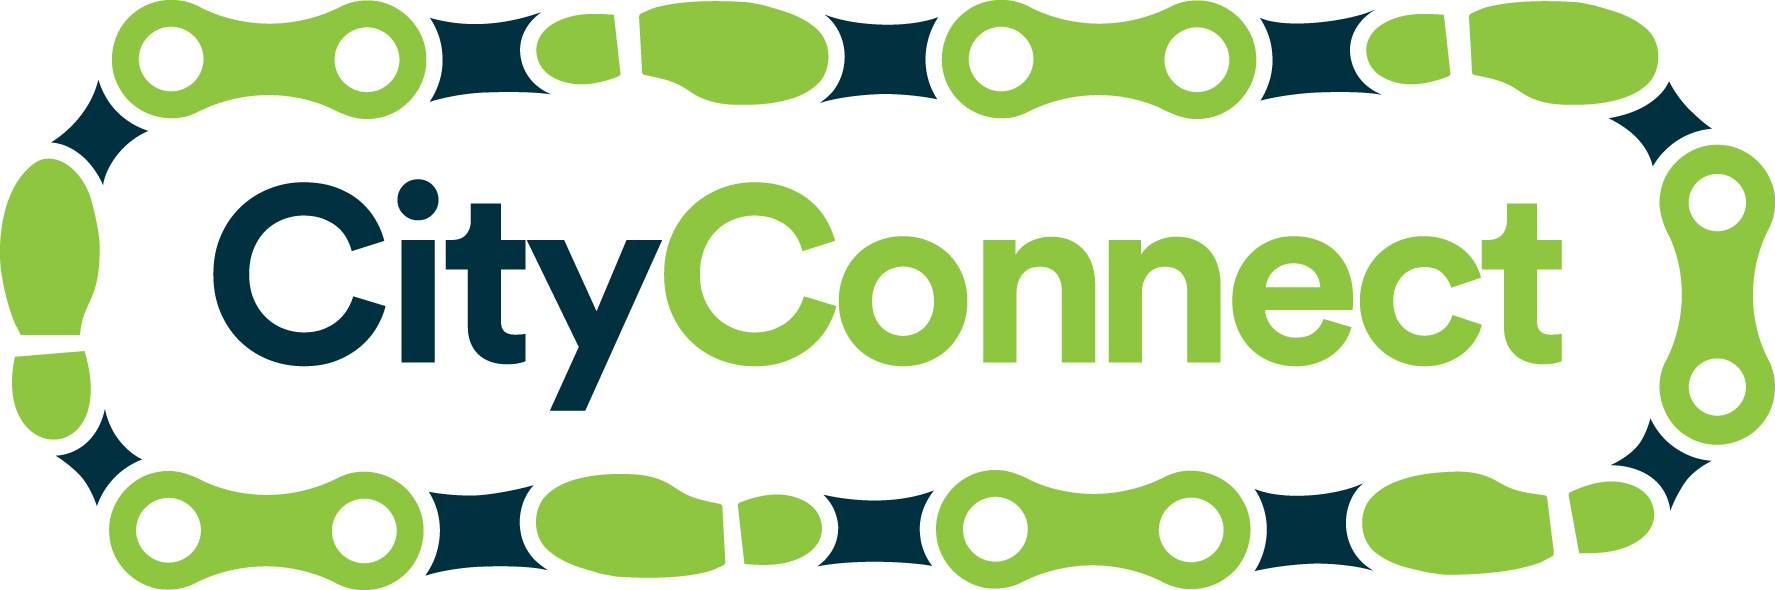 https://www.cyclecityconnect.co.uk/media/1098/cityconnect-logo.jpg